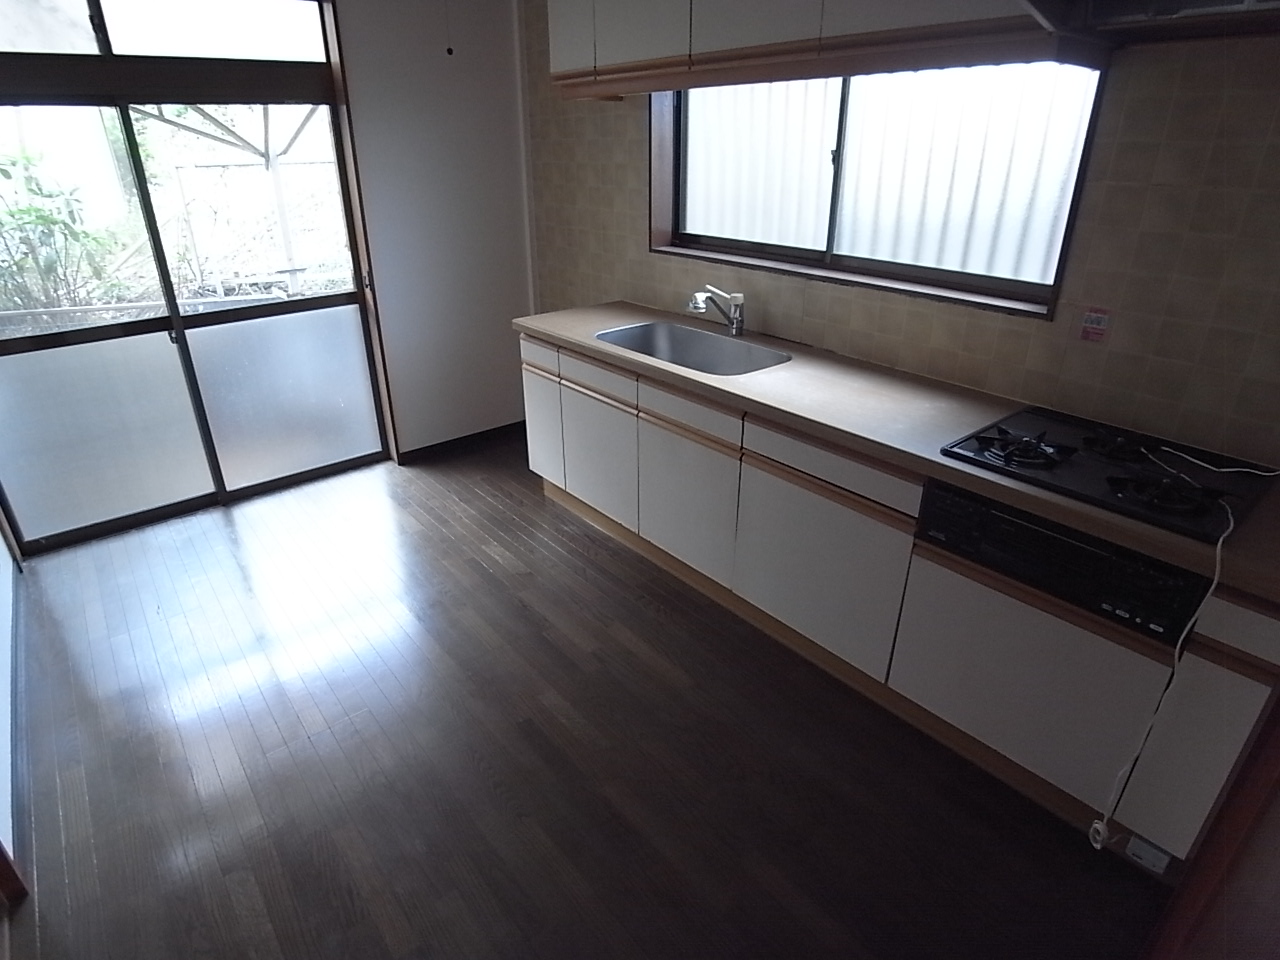 Kitchen. It is the comfort kitchen ☆ It is good to window often